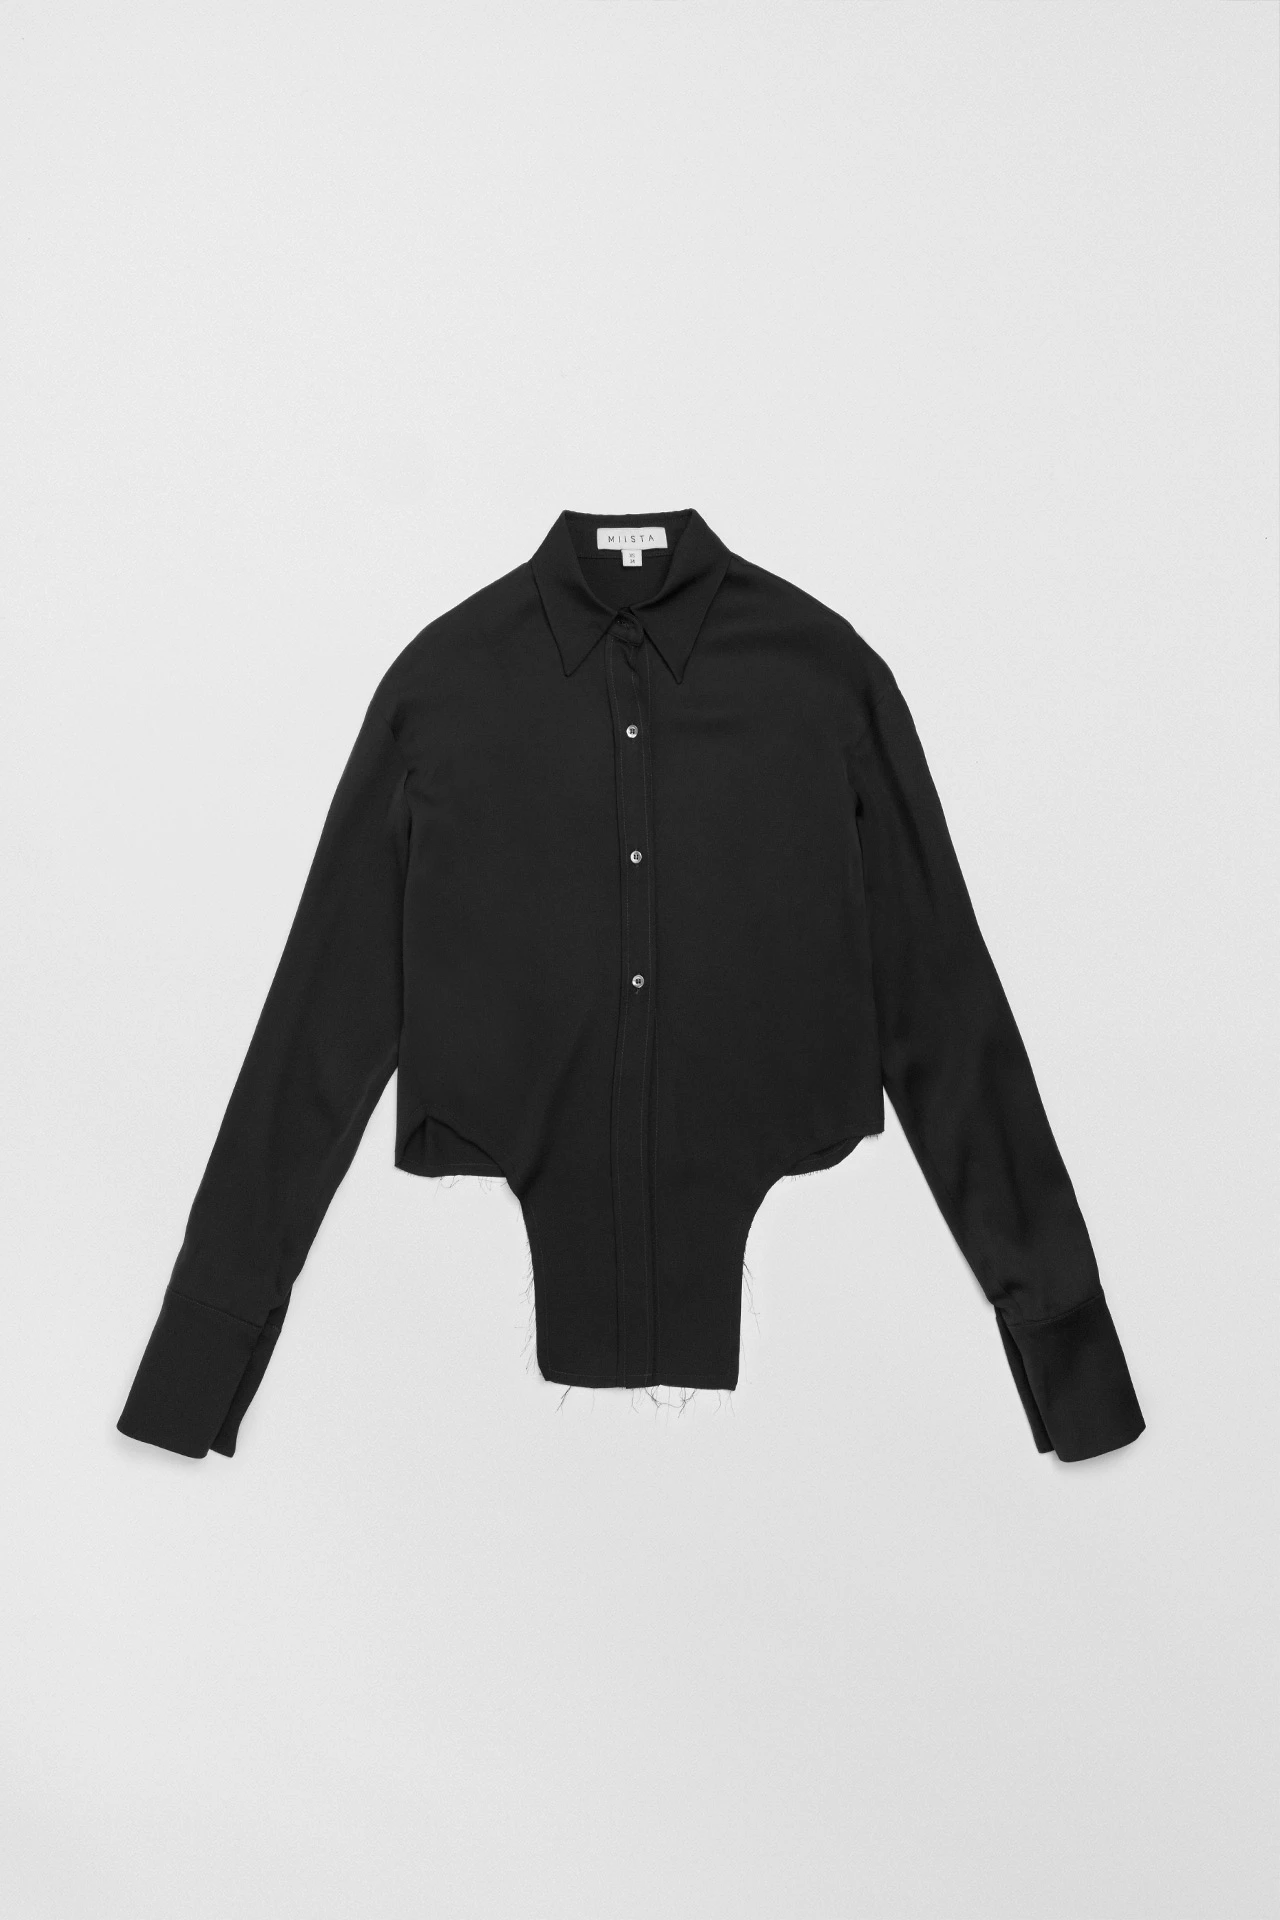 Miista-marques-black-shirt-01